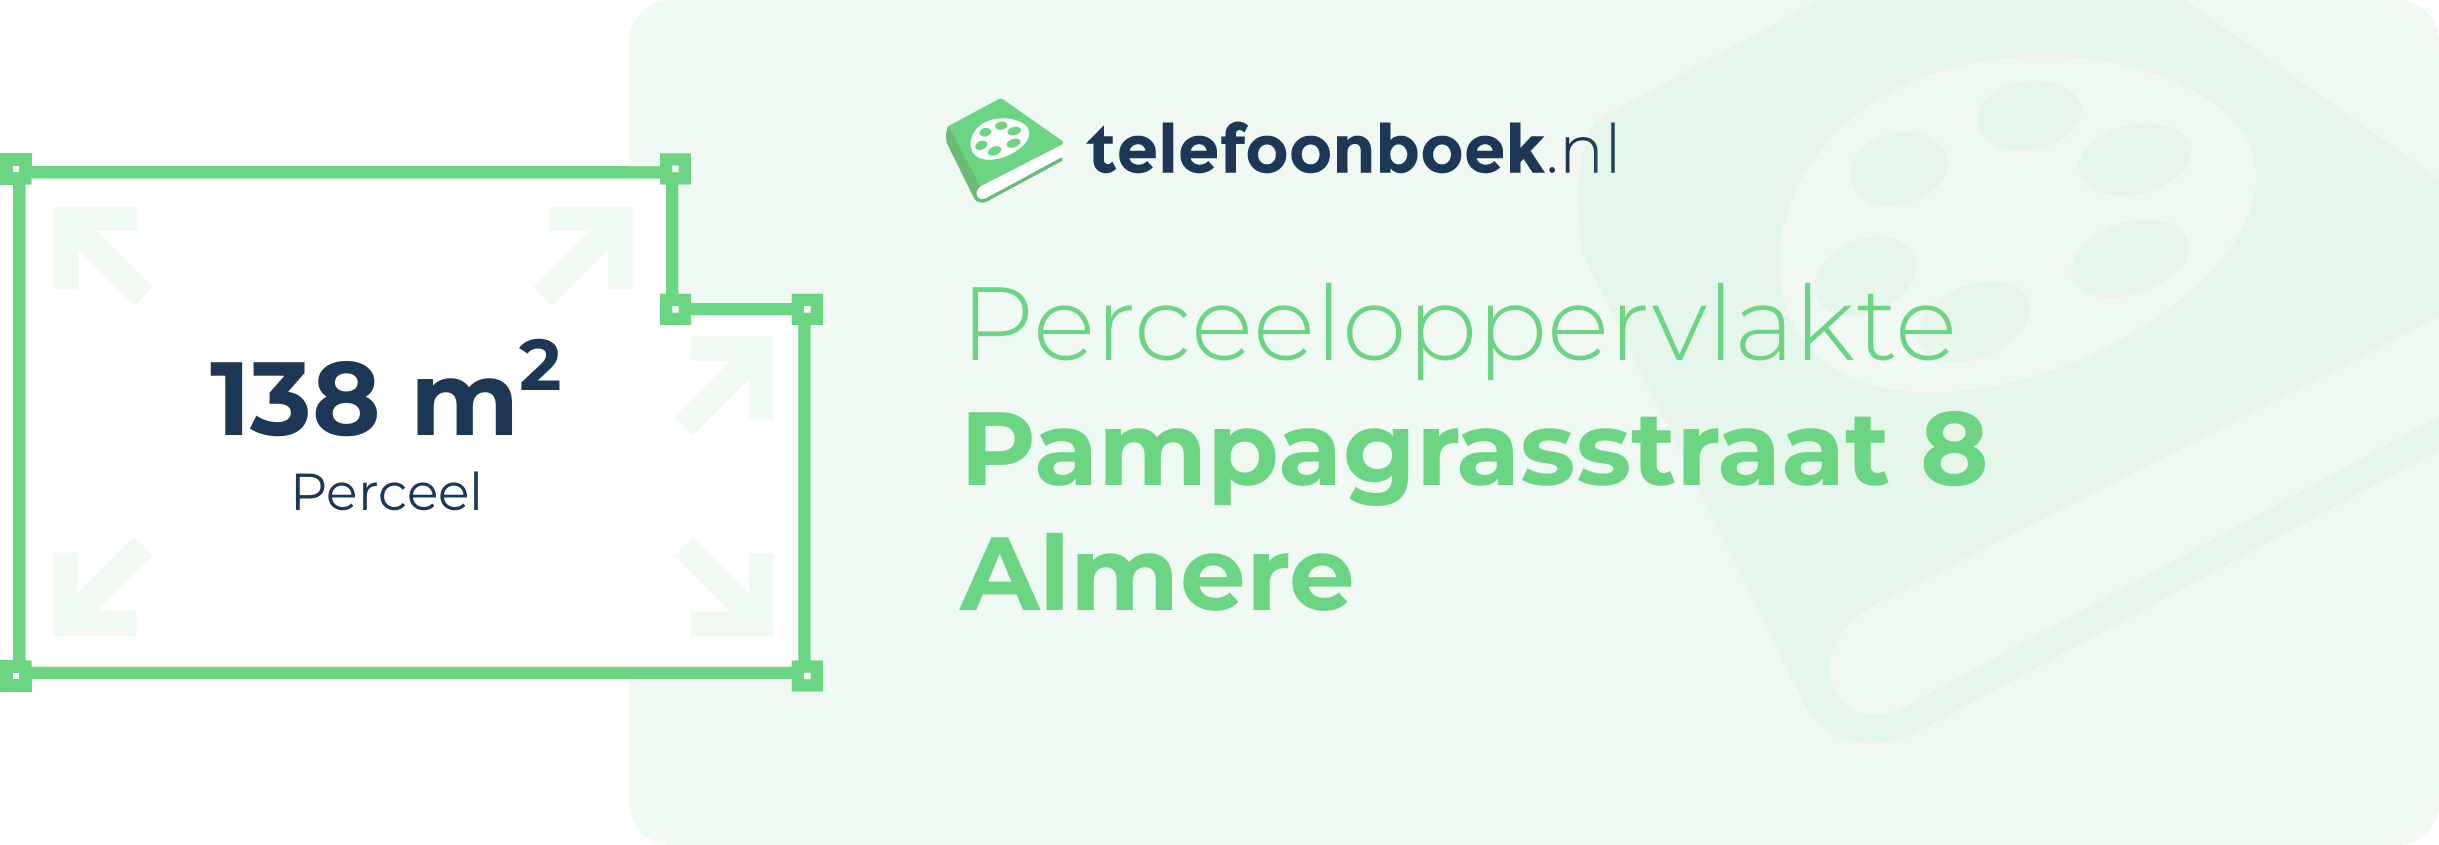 Perceeloppervlakte Pampagrasstraat 8 Almere